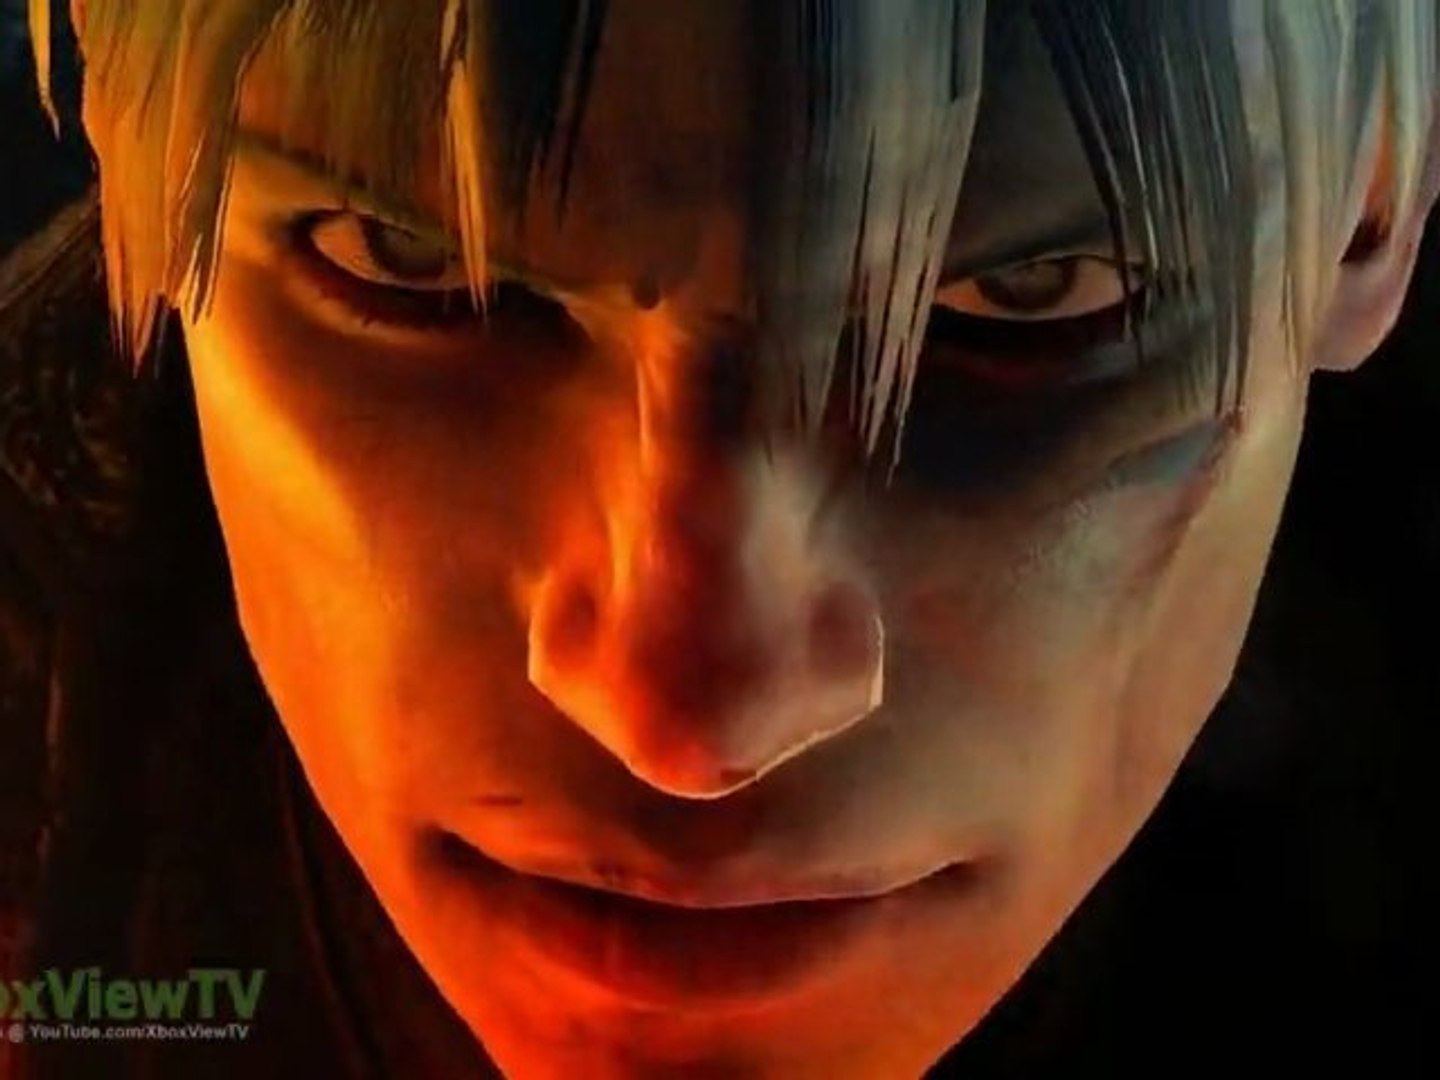 DmC: Devil May Cry Trailer & Artwork Released